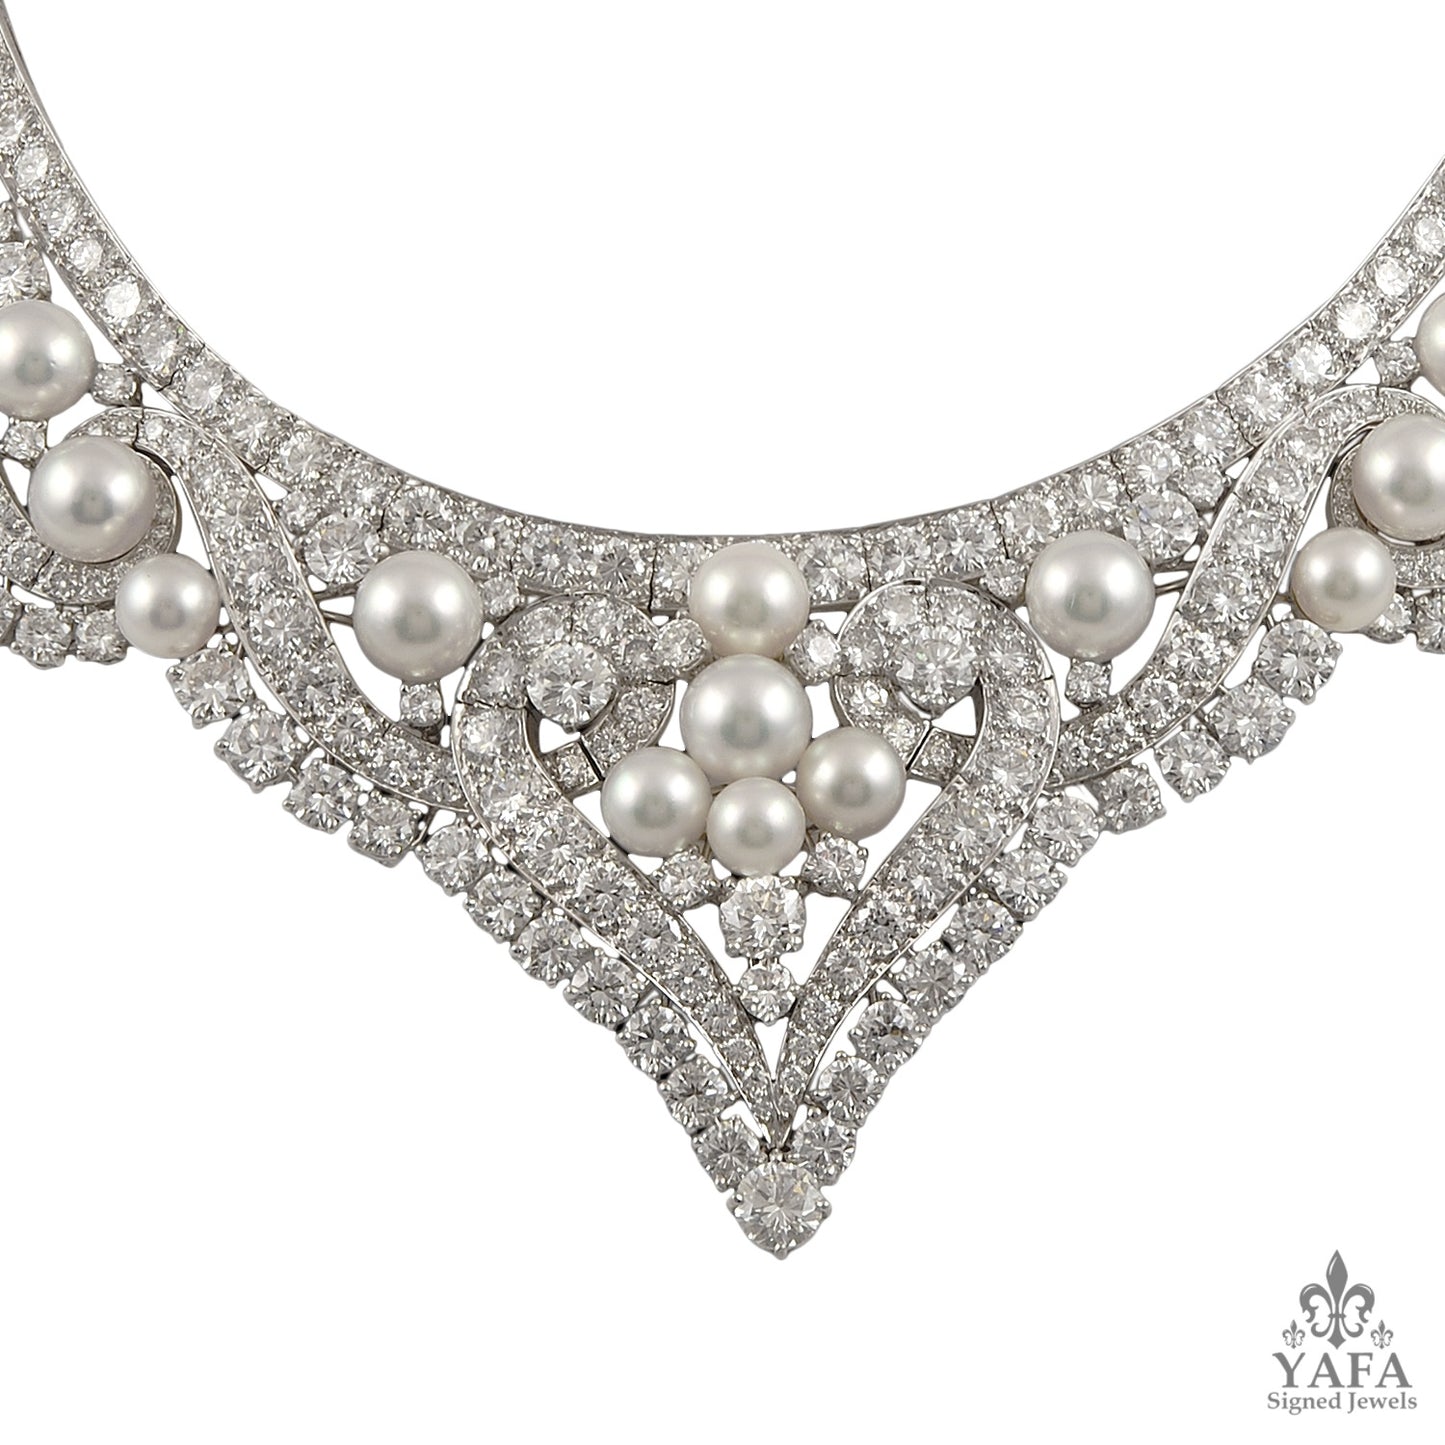 DAVID WEBB Pearl & Diamond Necklace / Tiara